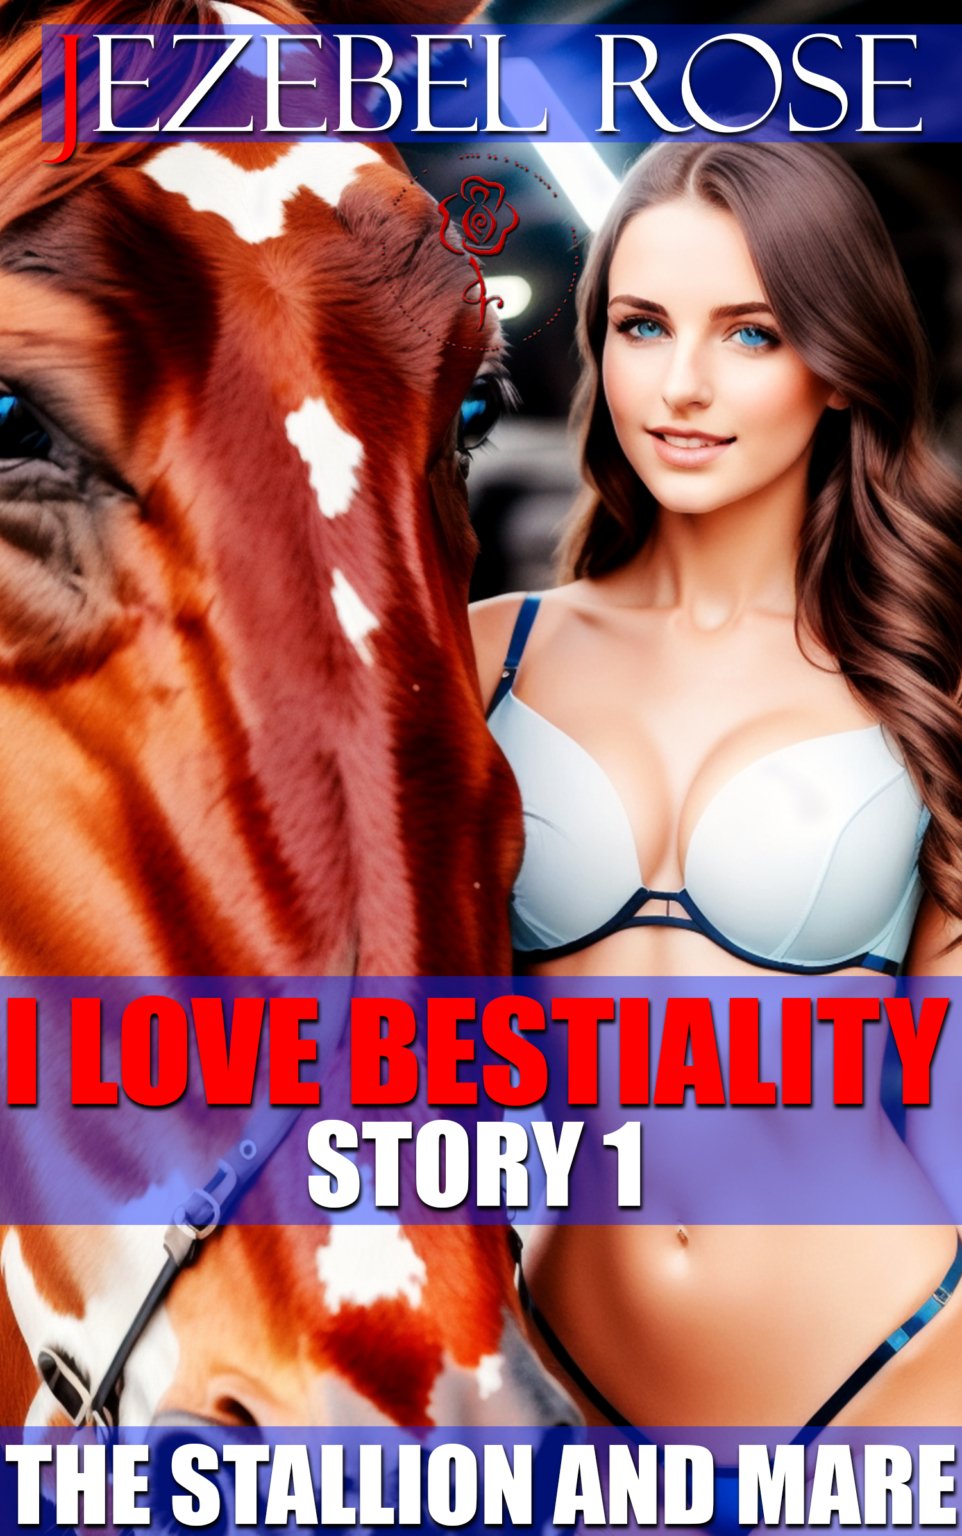 I Love Bestiality Story 1